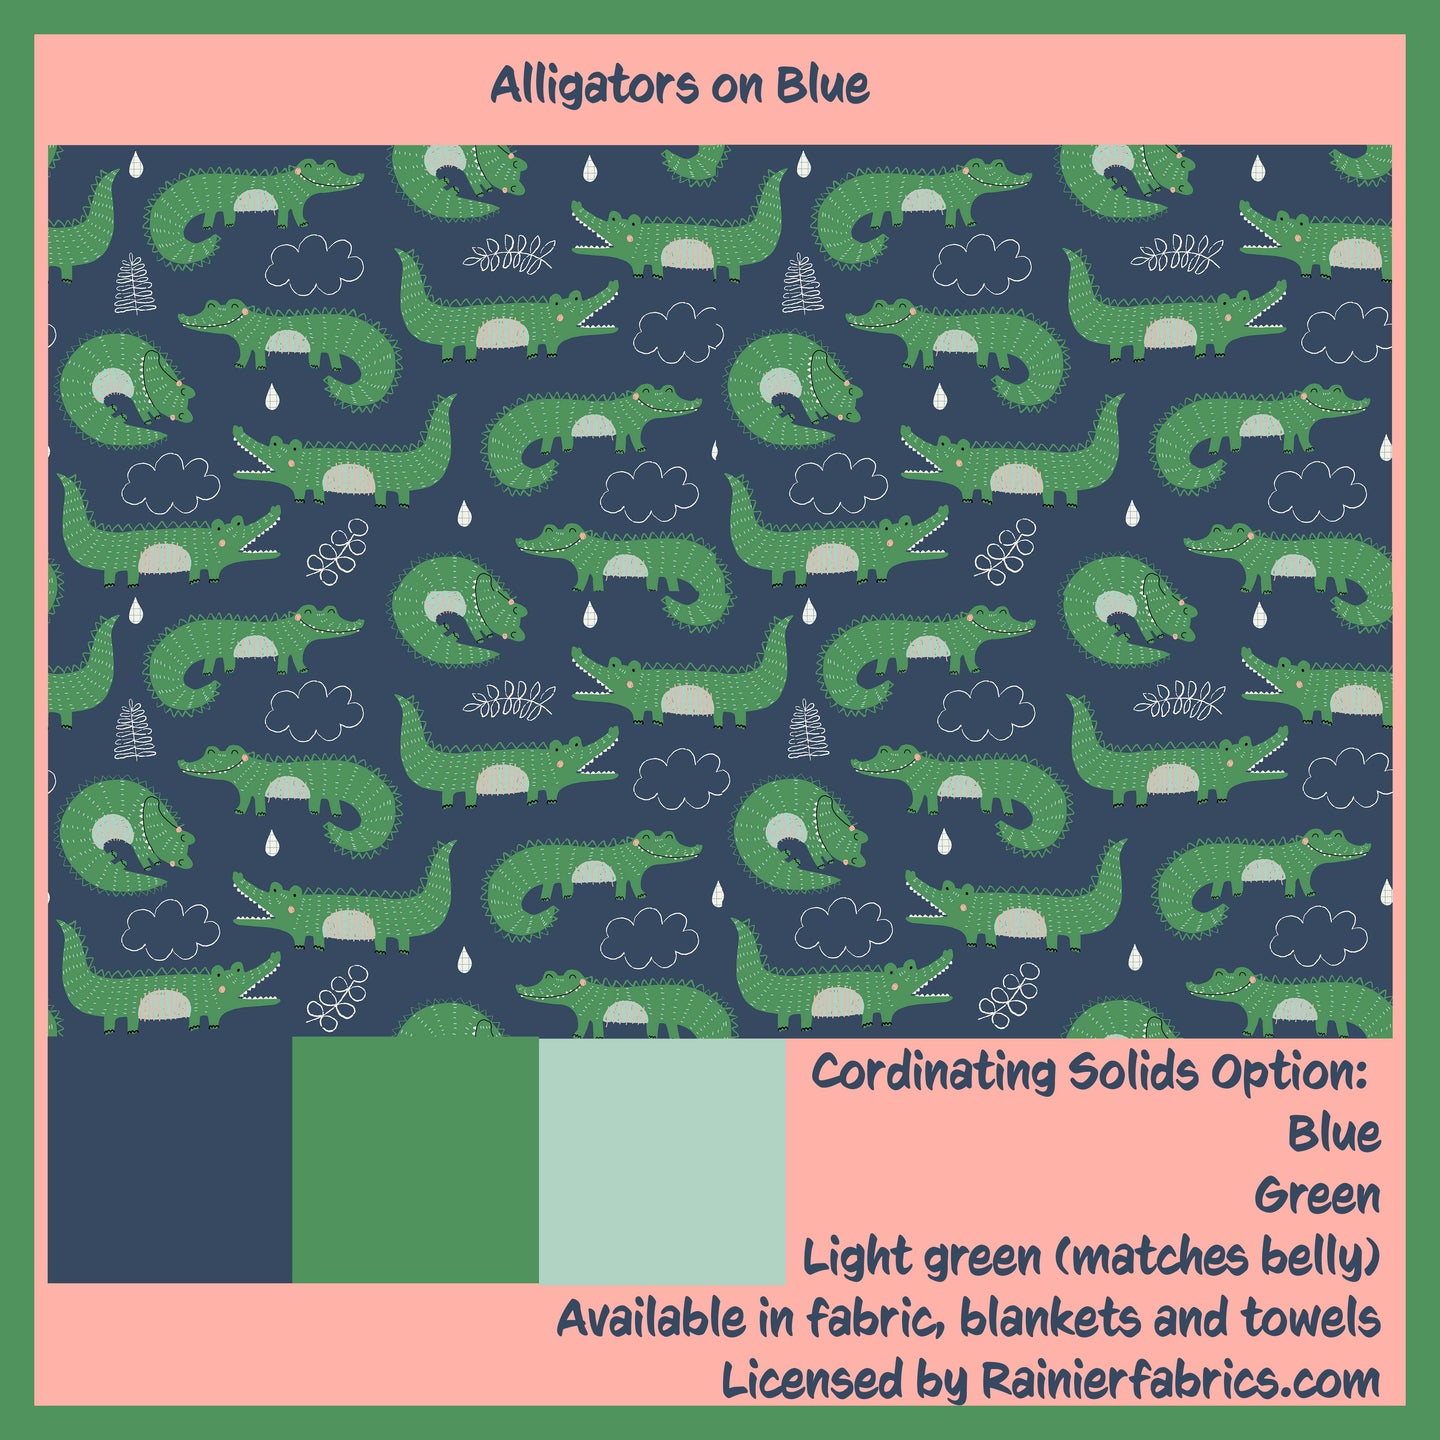 Alligators on Blue - 2-5 day turnaround - Order by 1/2 yard; Description of bases below